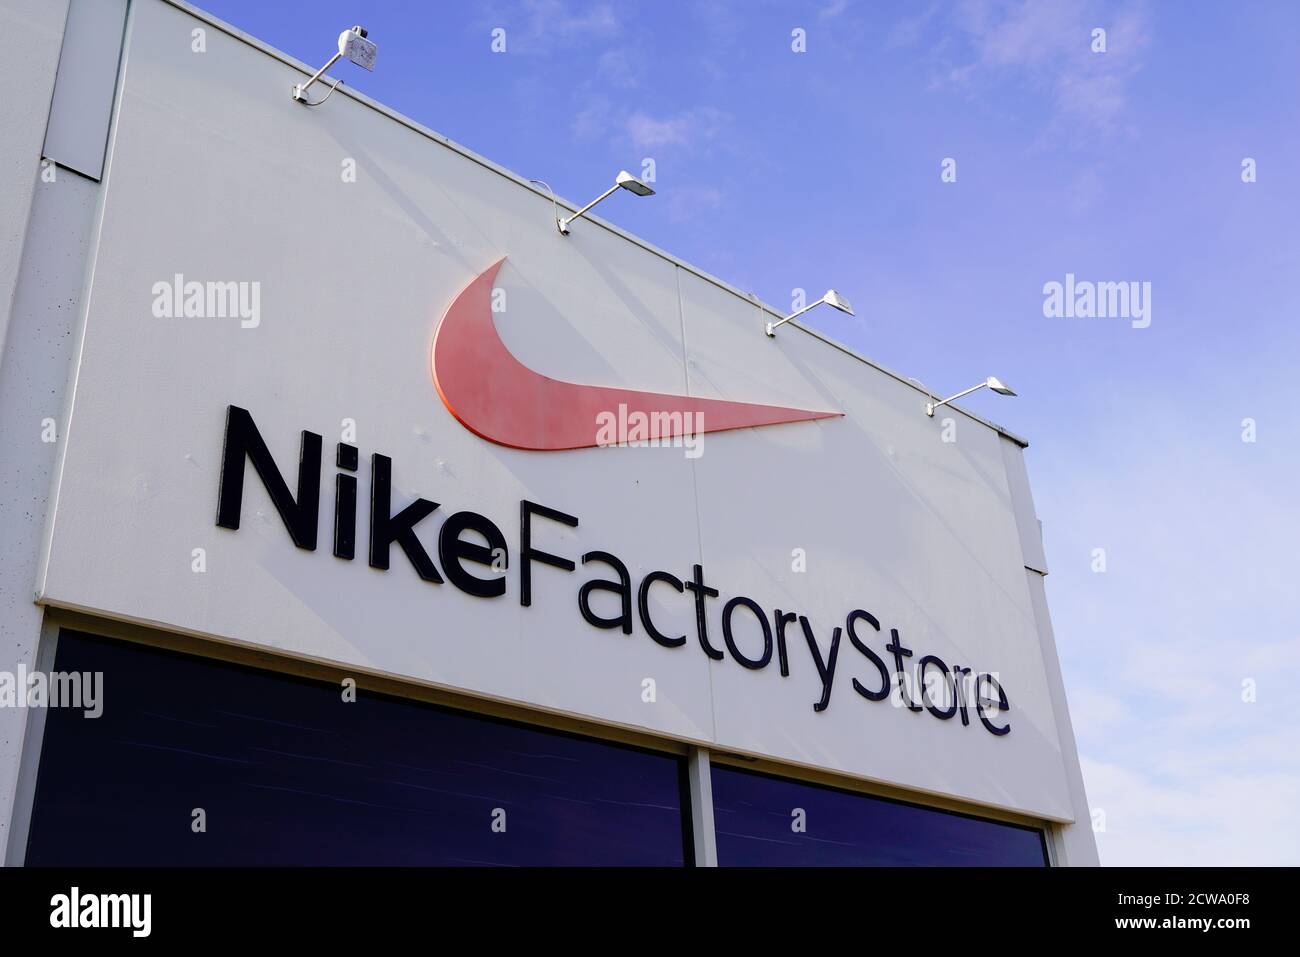 Nike factory store fotografías e imágenes de alta resolución - Alamy